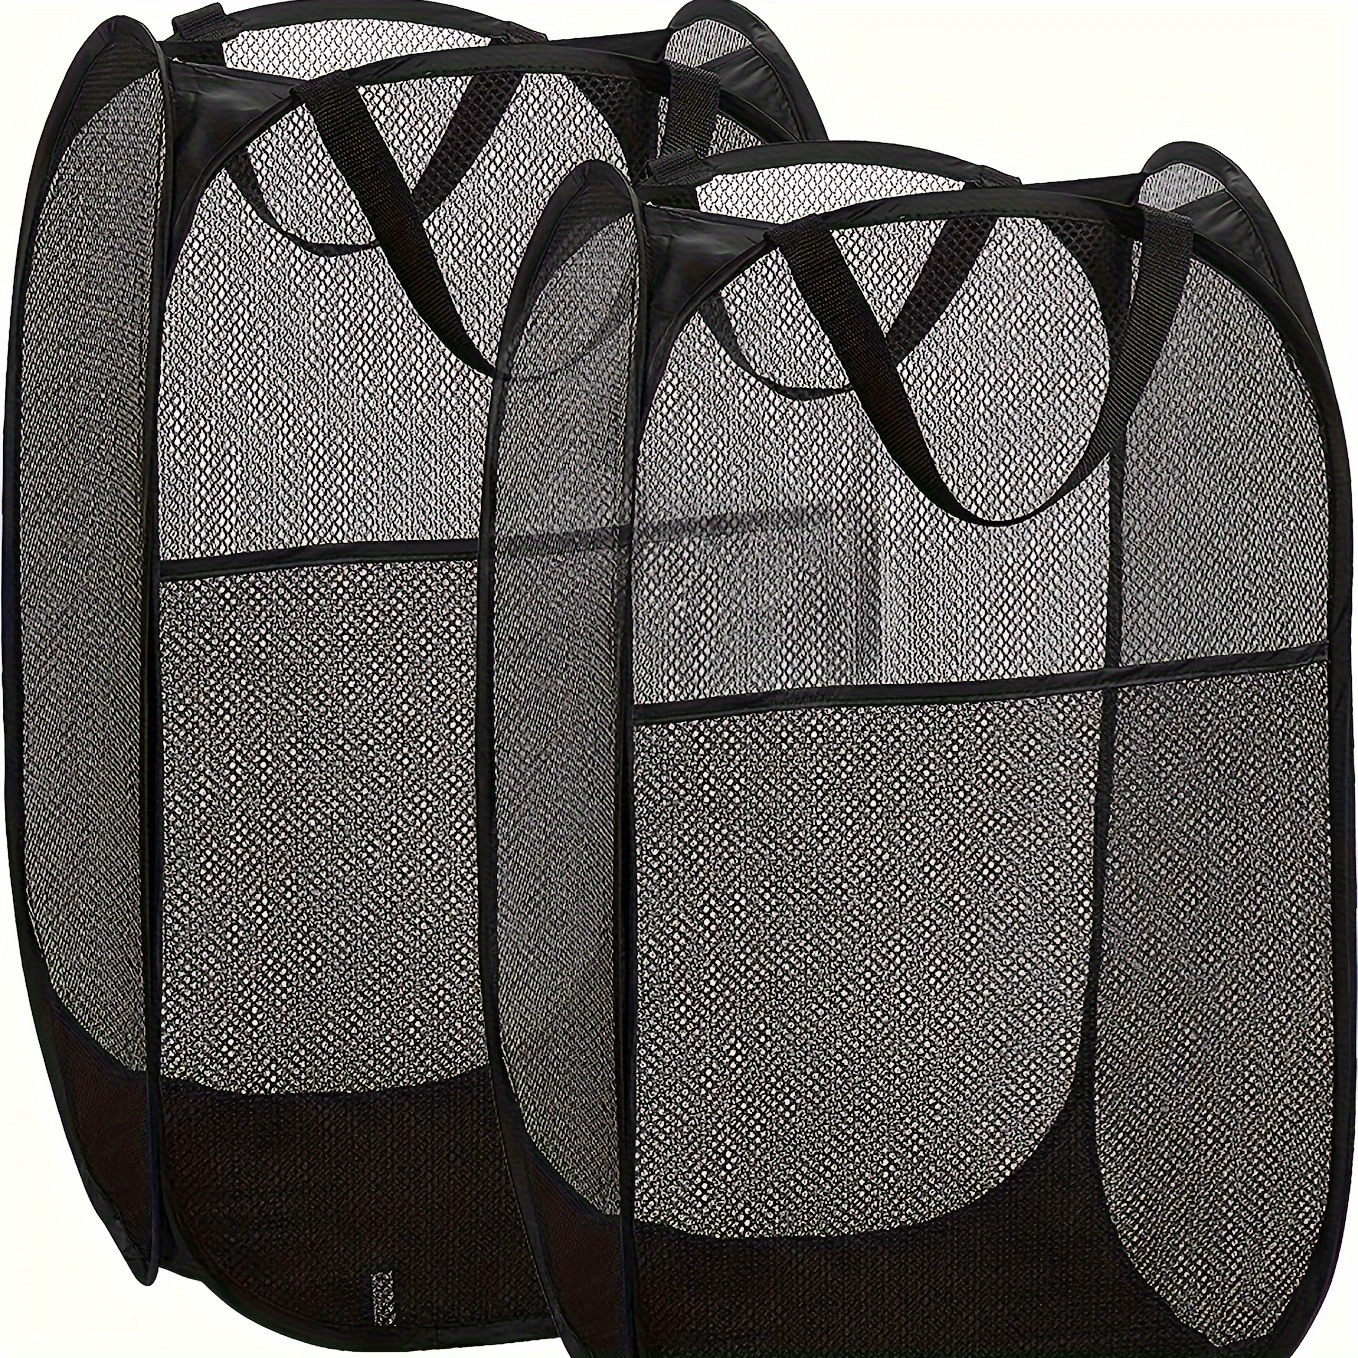 

2pcs Dirty Clothes Basket Popup Laundry Hamper Foldable Pop-up Mesh Hamper Dirty Clothes Basket With Carry Handles